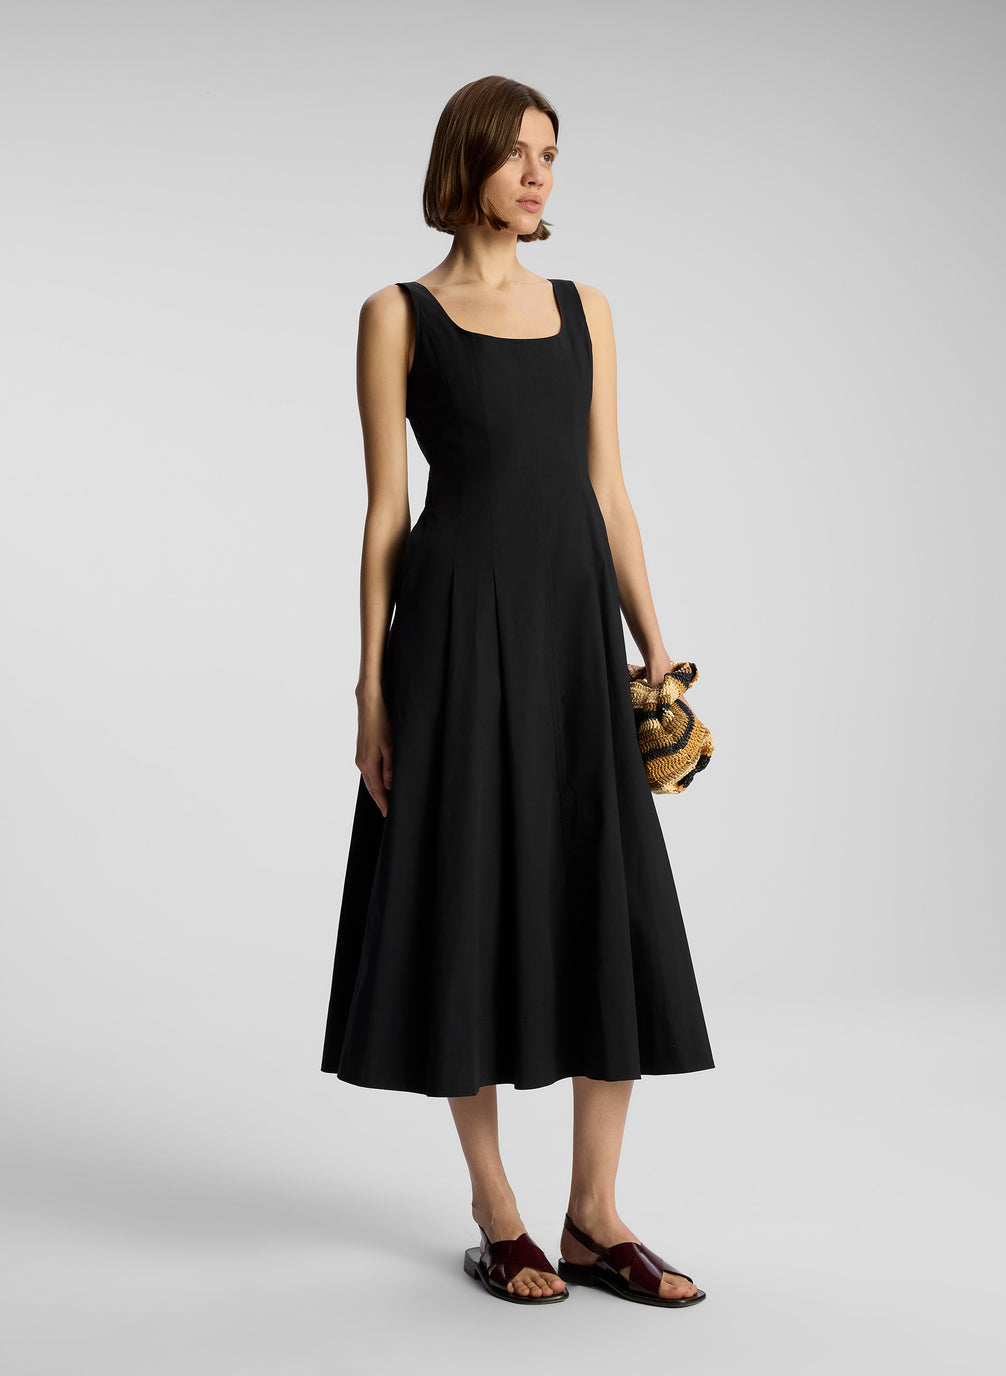 side view of woman wearing black sleeveless midi dress